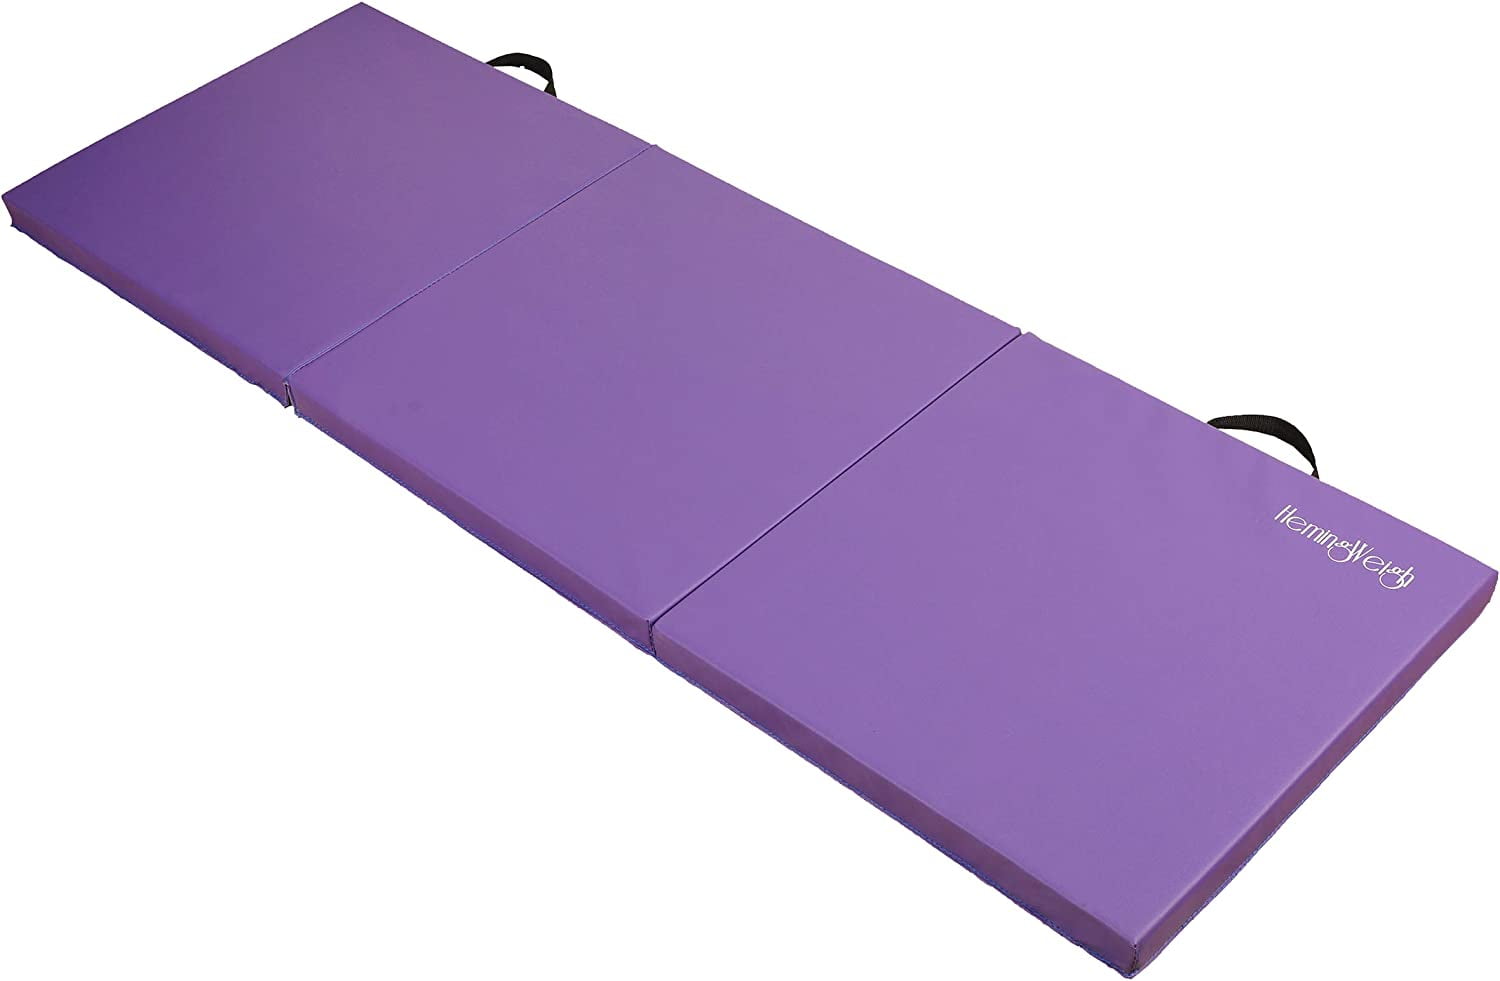 Hemingweigh 1.5 Thick Tri-Fold Gymnastic Mat for Yoga, Stretching